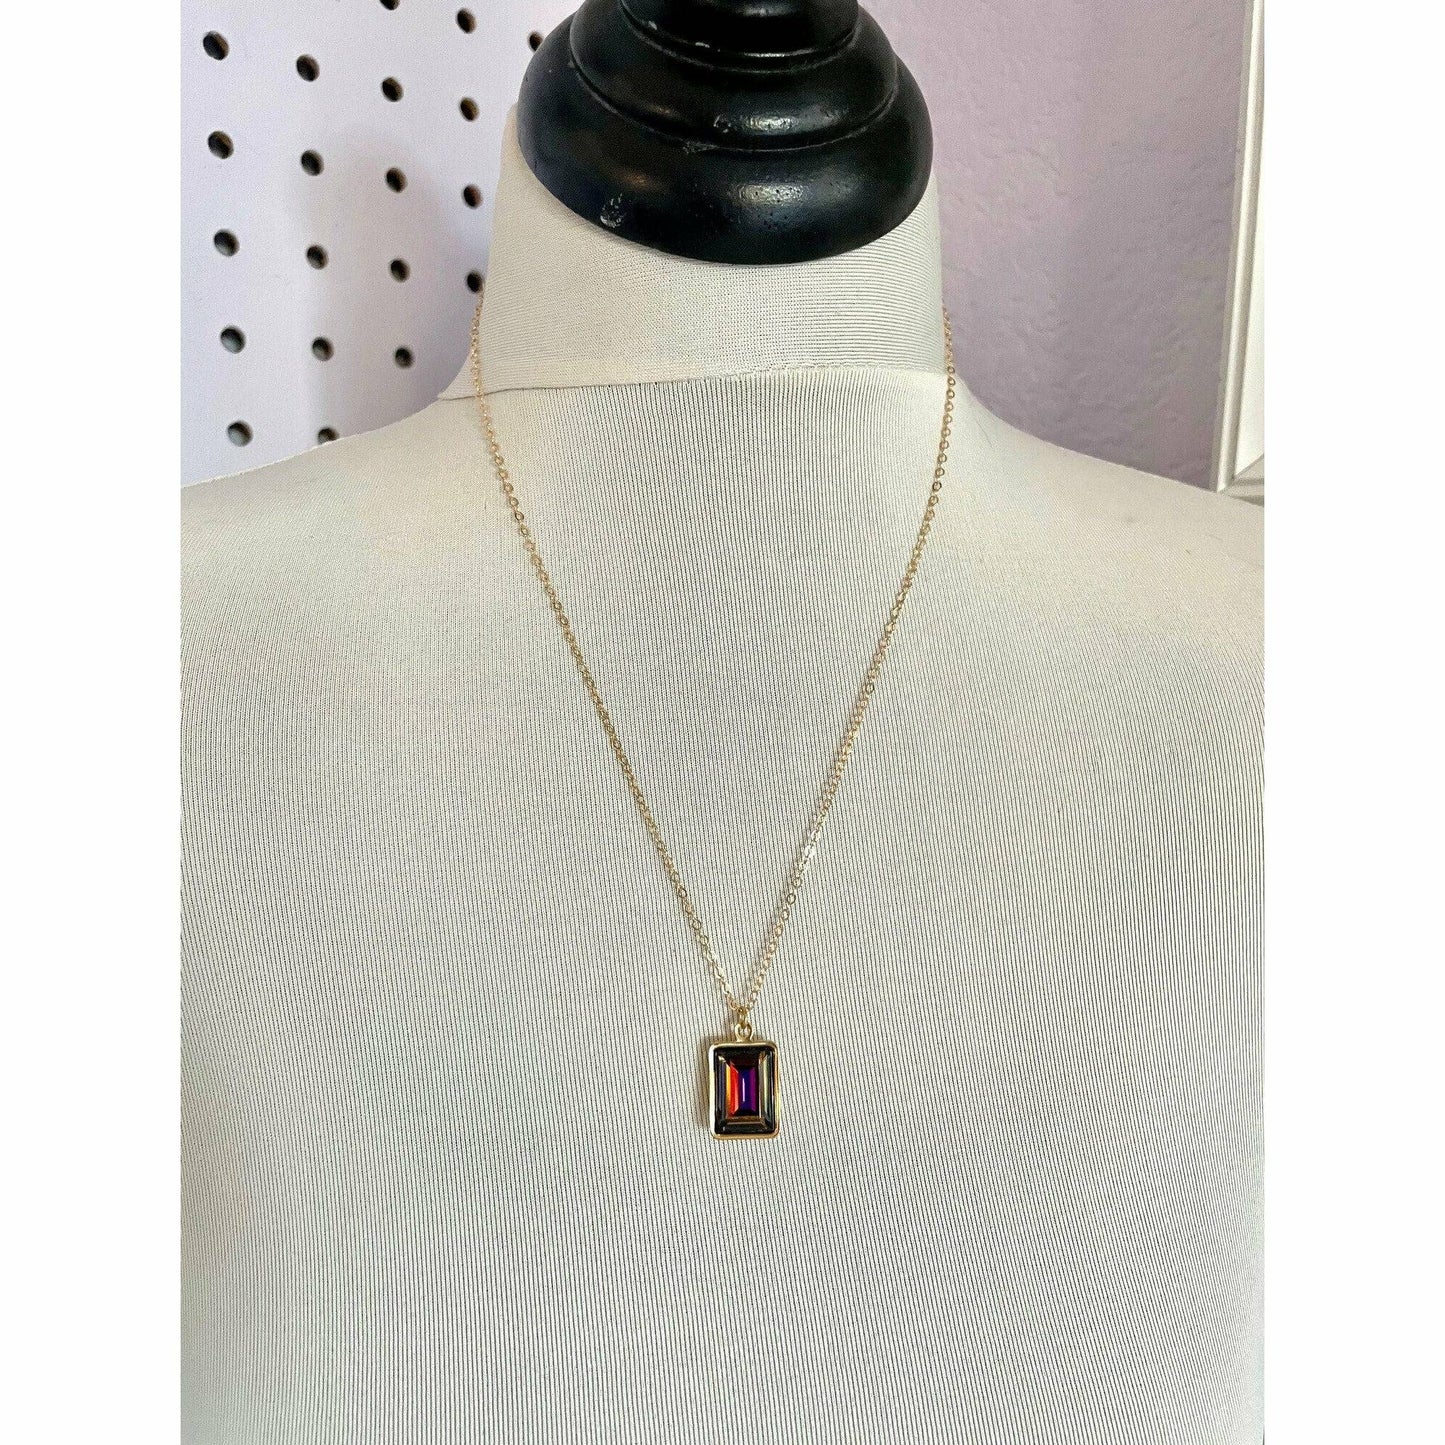 Rainbow rectangle crystal necklace